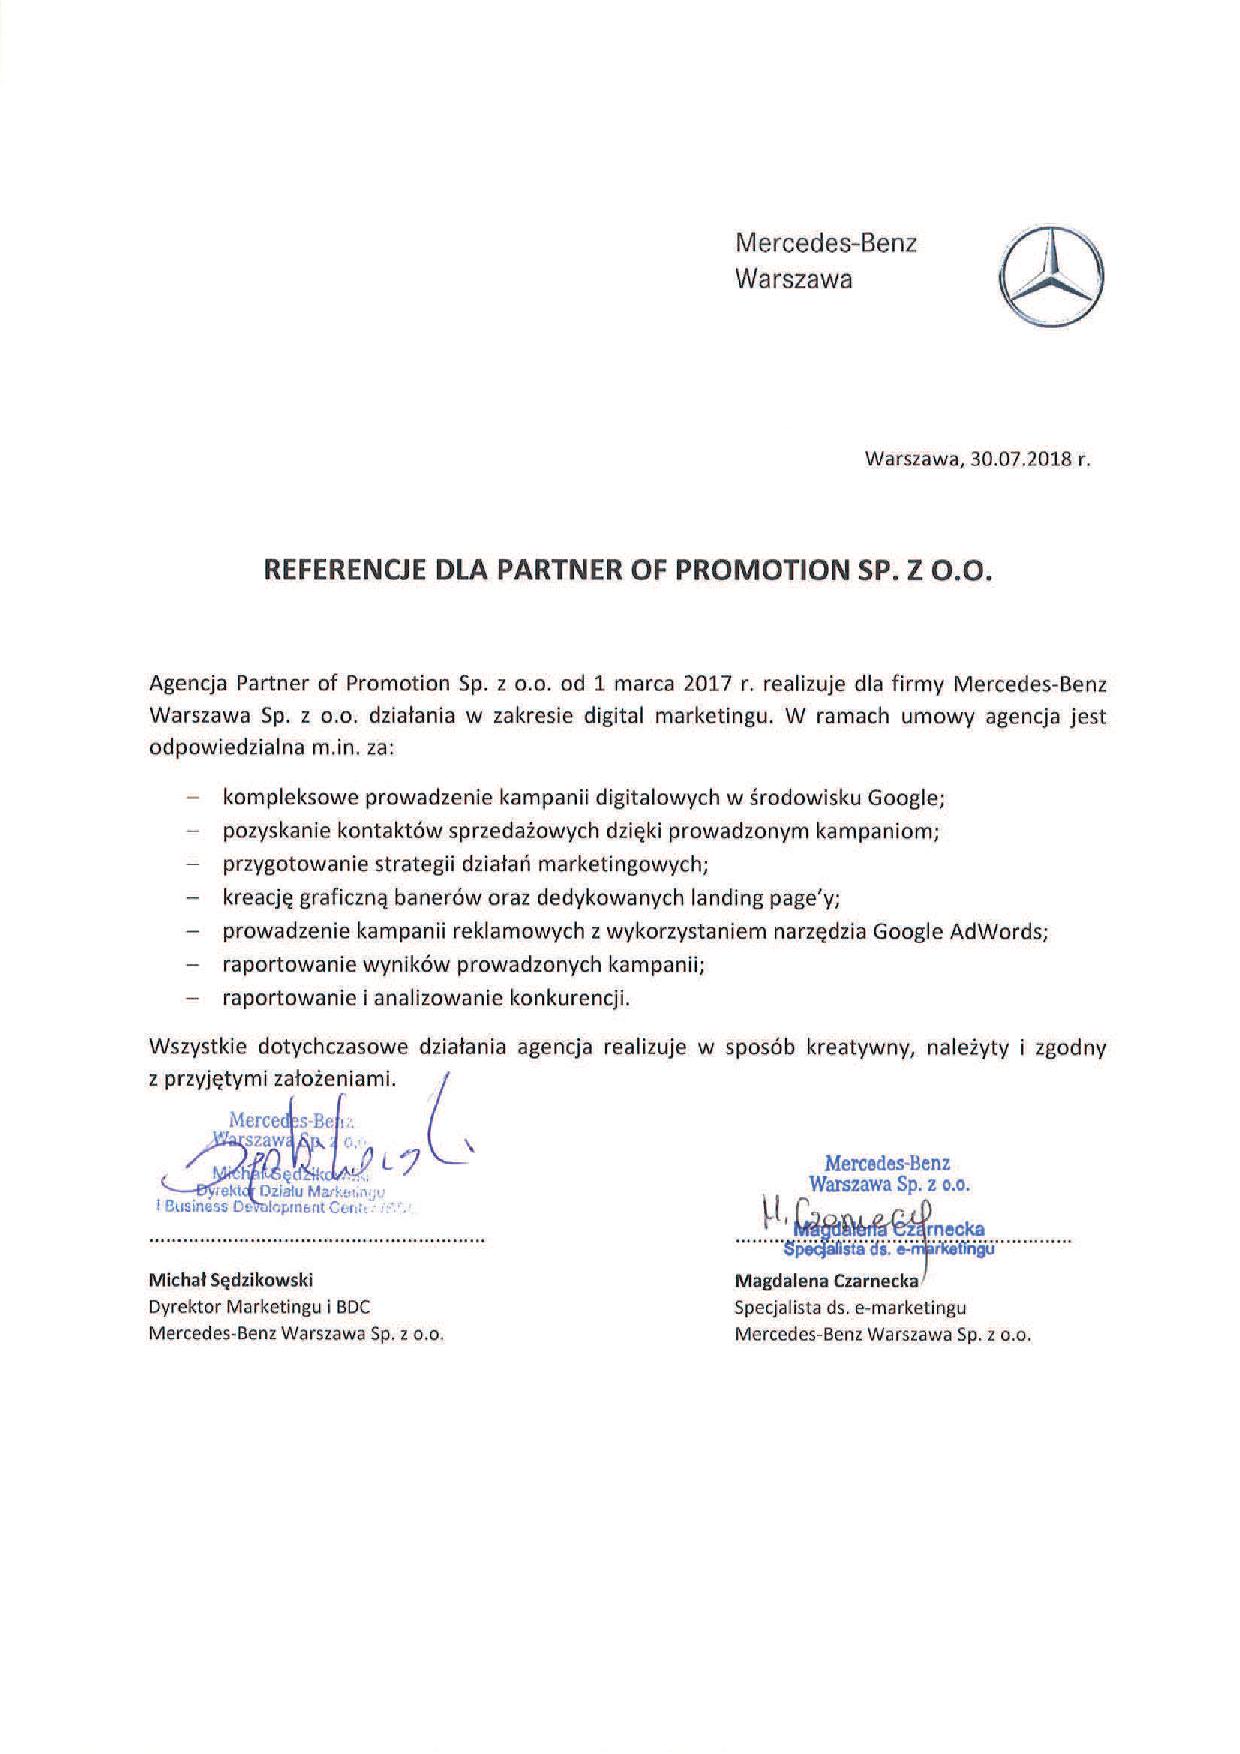 Mercedes-Benz Warszawa_referencje_digital marketing_SKAN._30072018.jpg